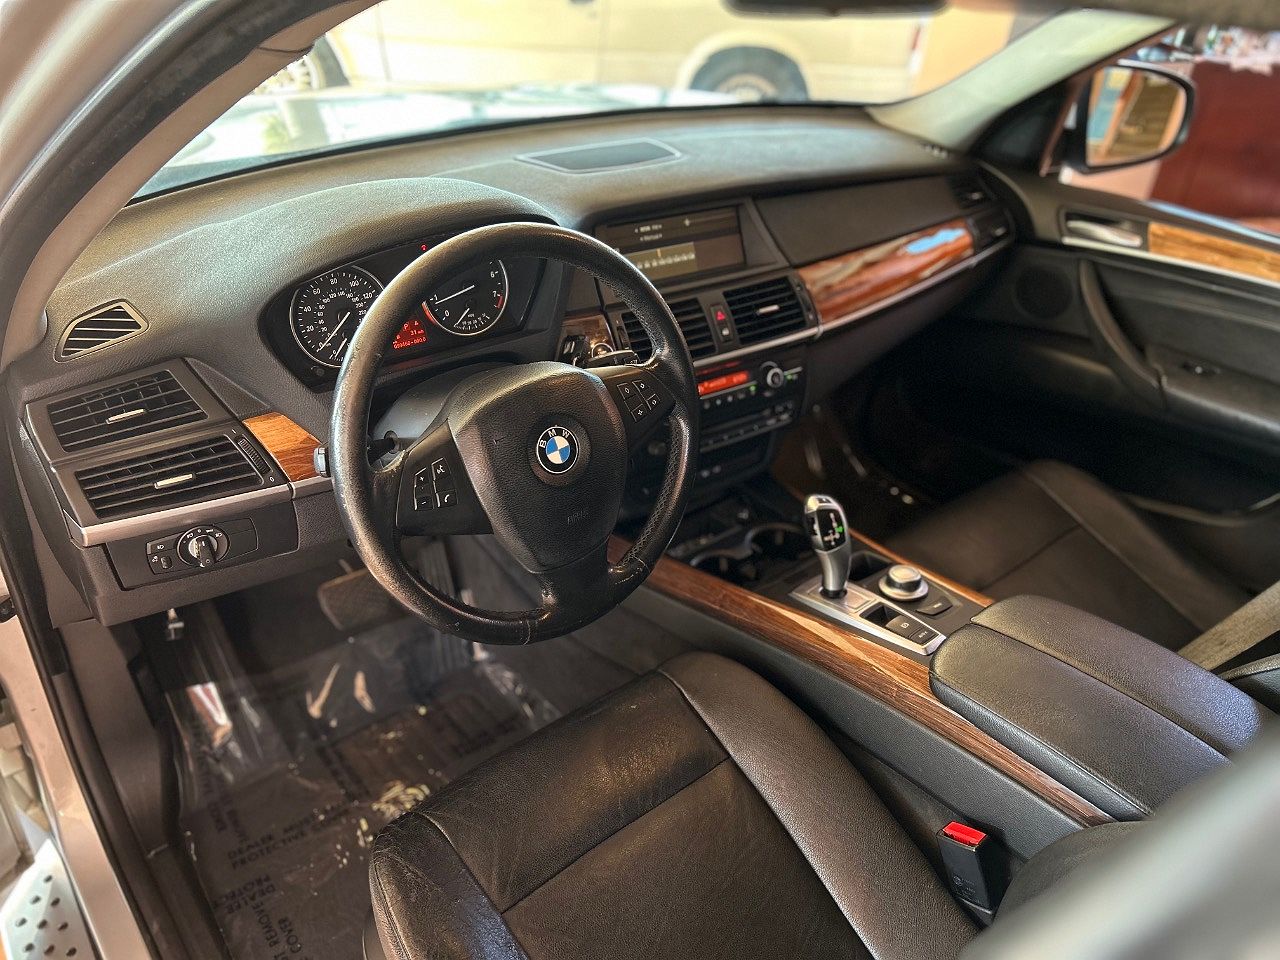 2007 BMW X5 3.0si image 8